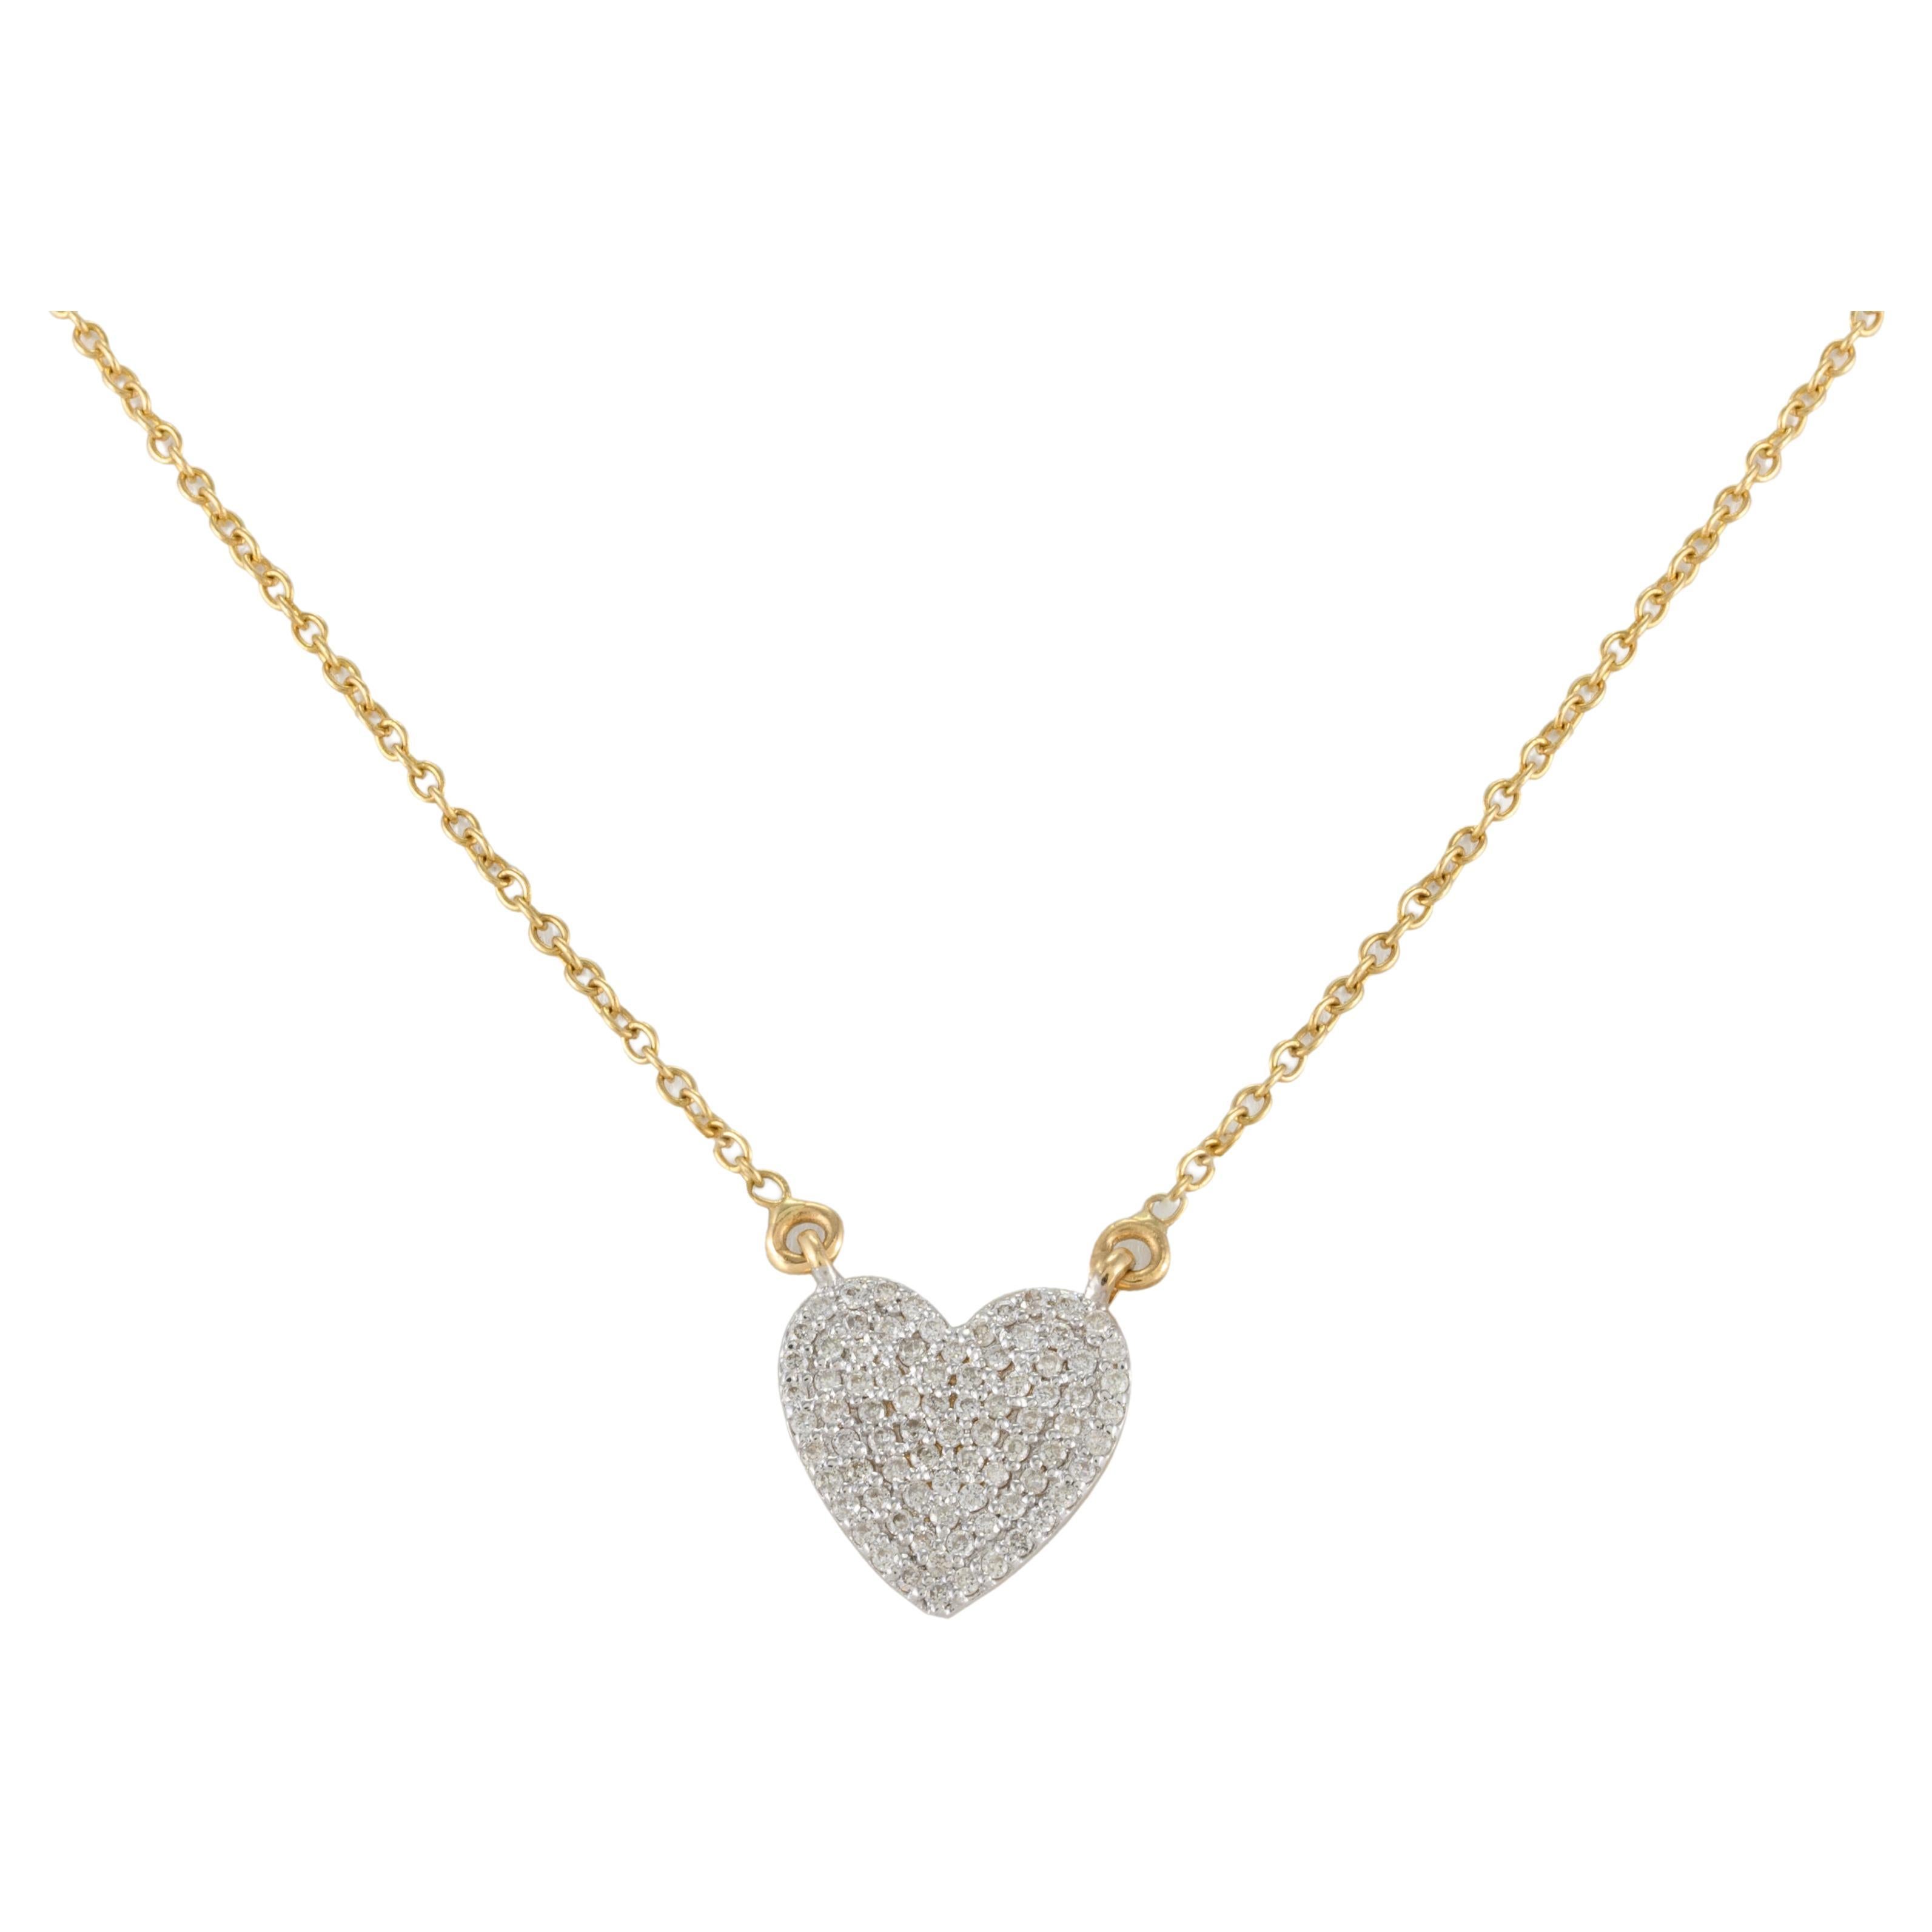 Collier en or jaune massif 18k avec pendentif en forme de coeur en diamant Cadeaux de Noël en vente